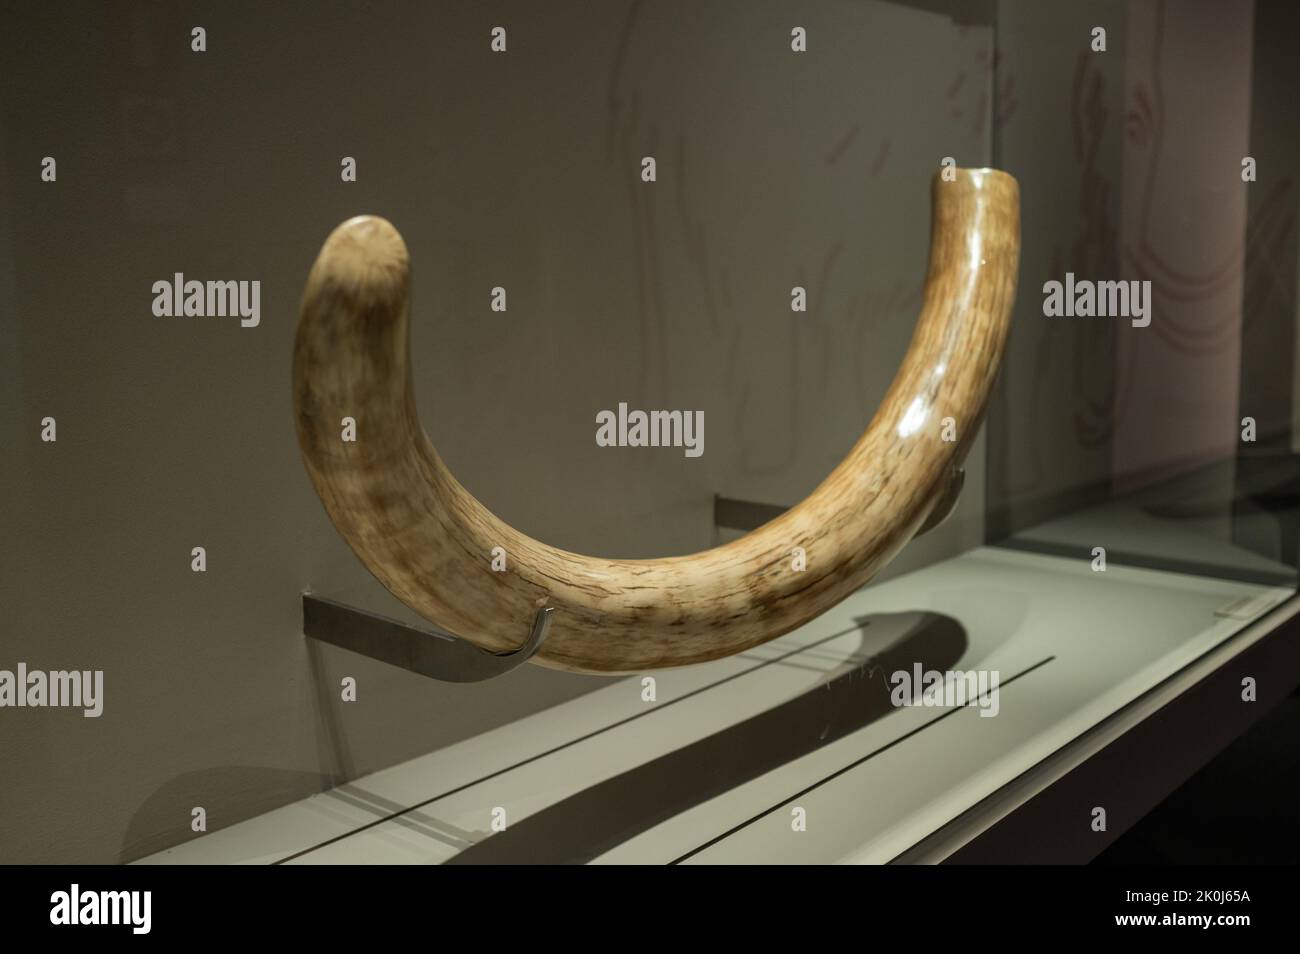 Female mammoth tusk.    'Mamut' exhibition at CaixaForum on Mammoths, the Giants of Ice Age, Zaragoza, Spain. Stock Photo